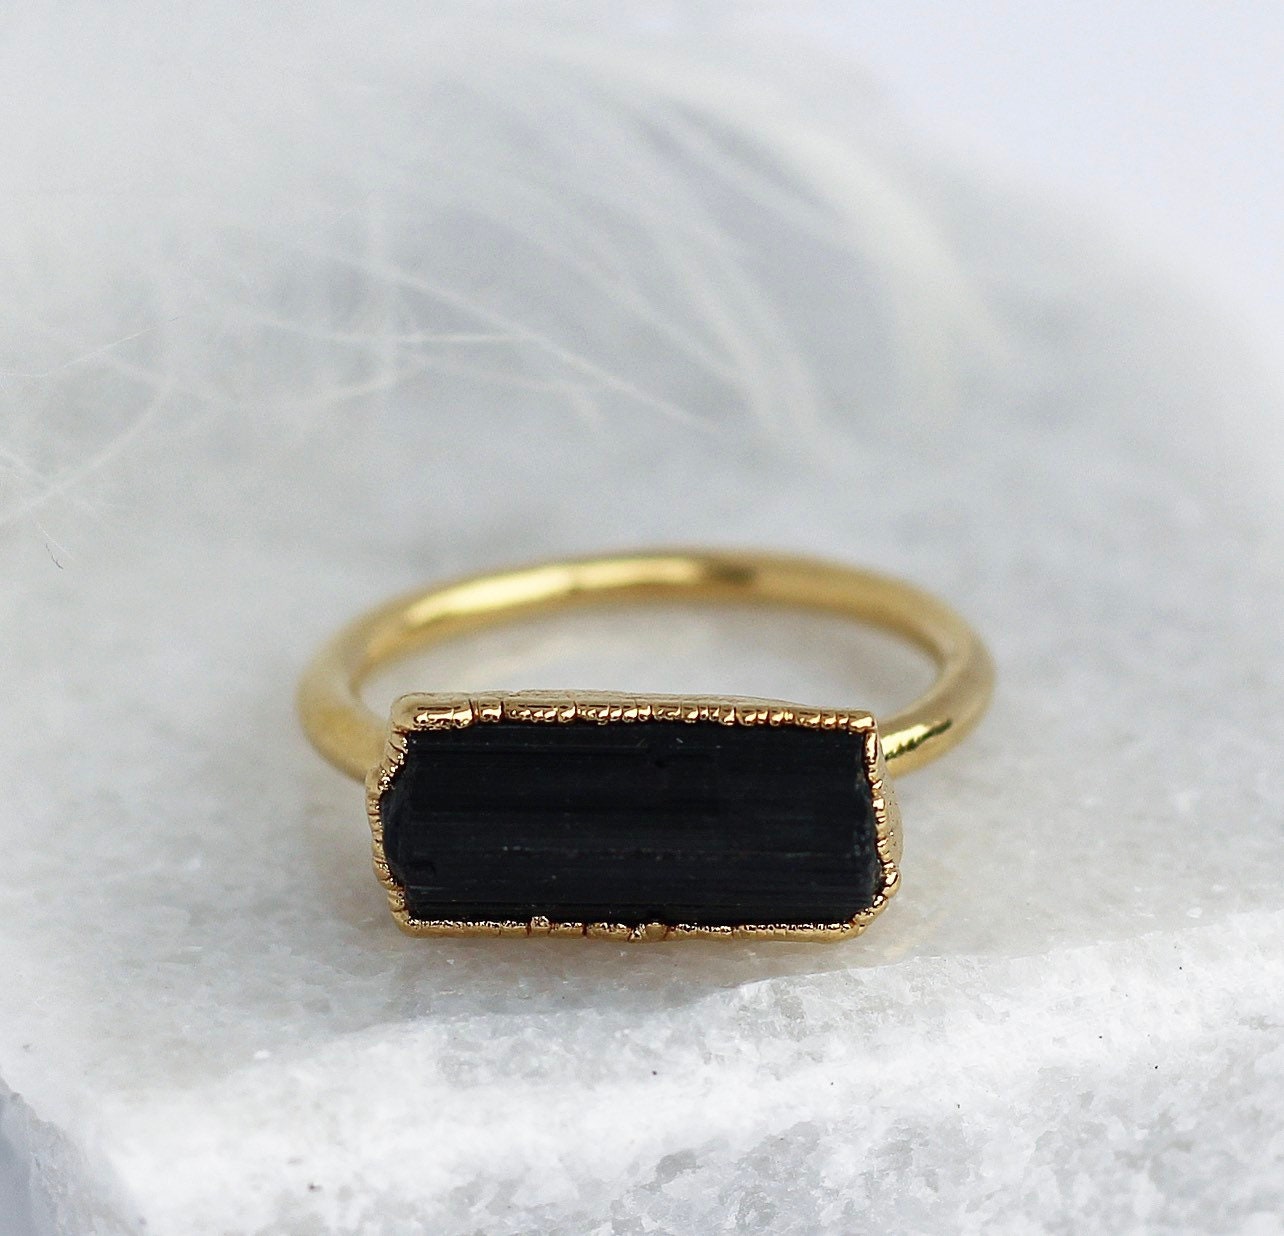 Raw Black Tourmaline Ring in Gold, Black Tourmaline Crystal Ring, Protection Stone Ring, Grounding Stone Jewelry, Raw Black Tourmaline